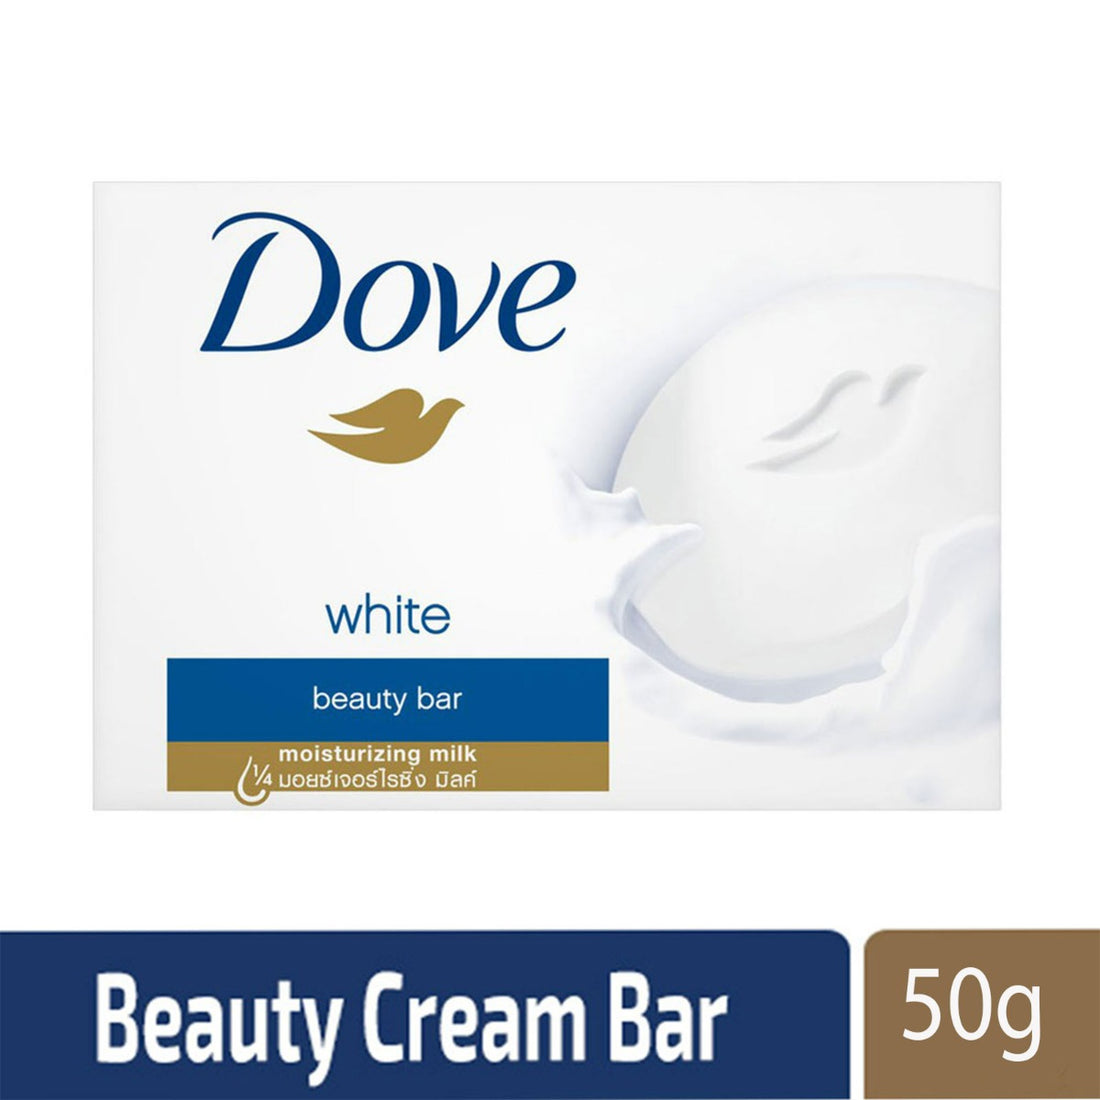 Dove Beauty Bar Soap White